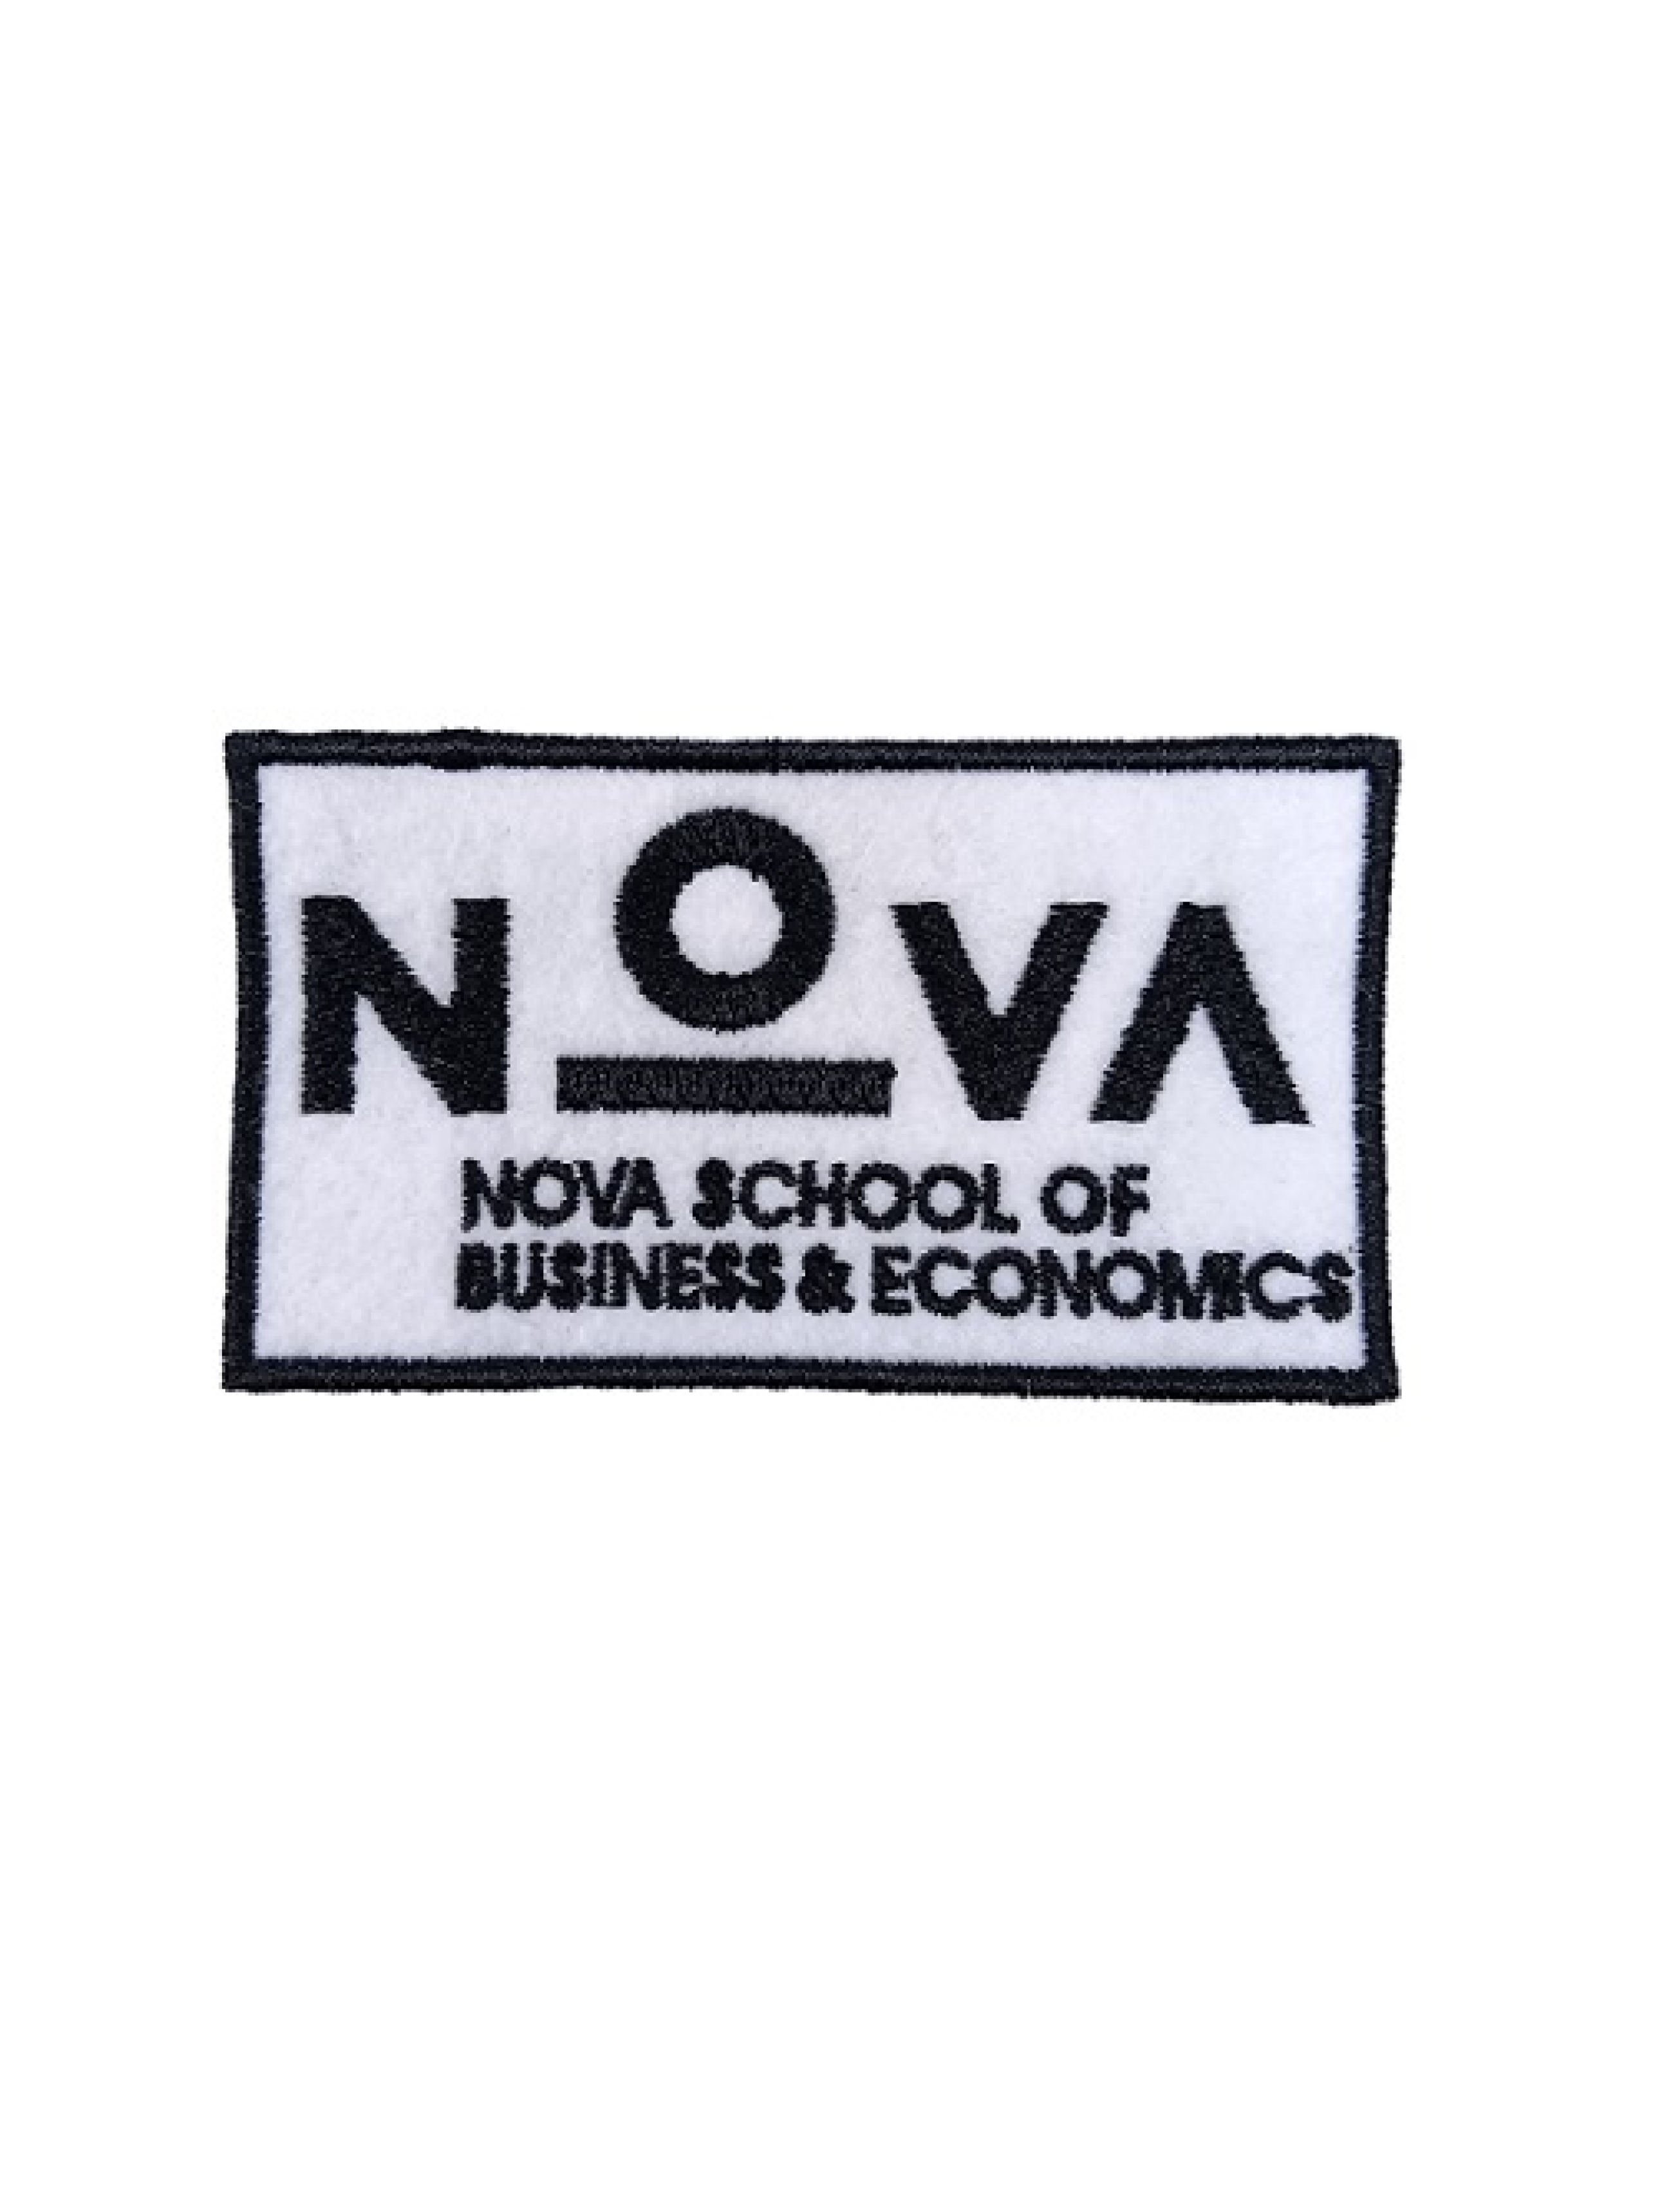 NOVA School of Businnes & Economics